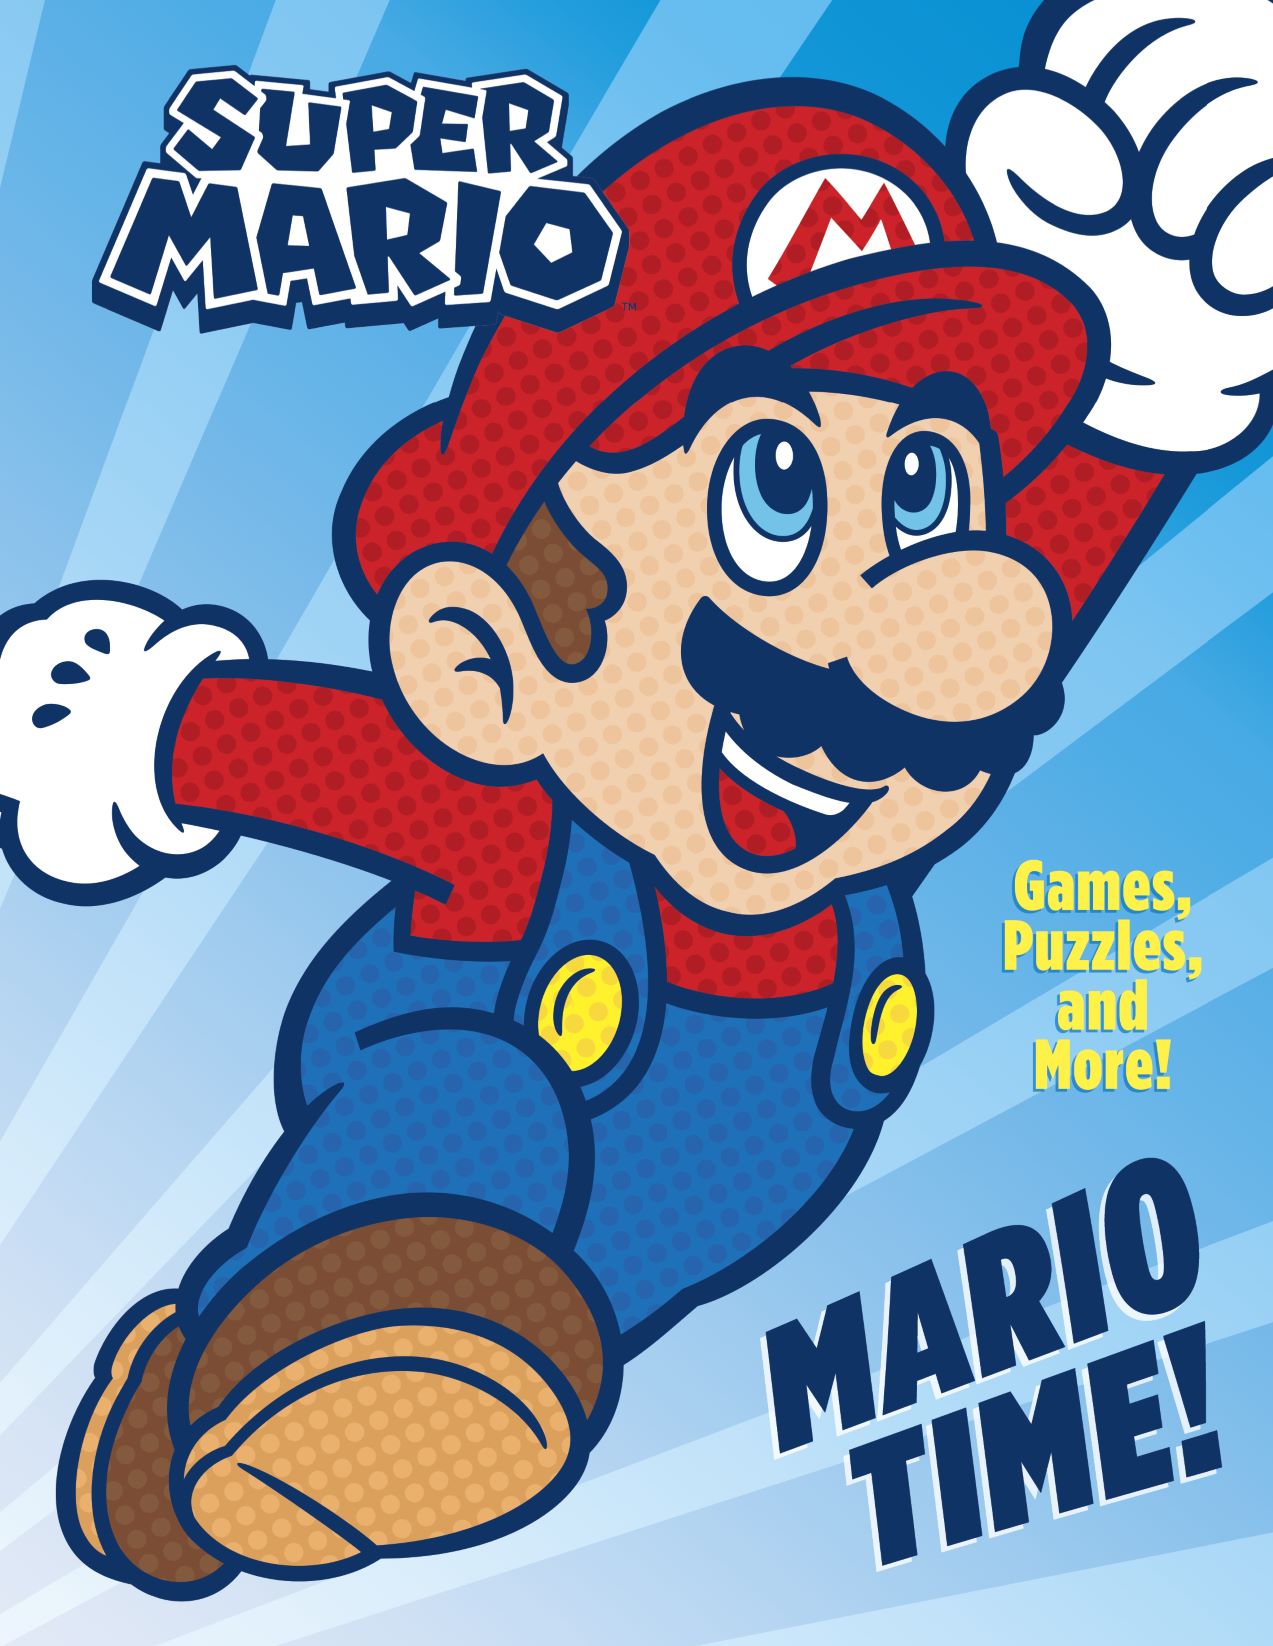 Super Mario Mario Time!